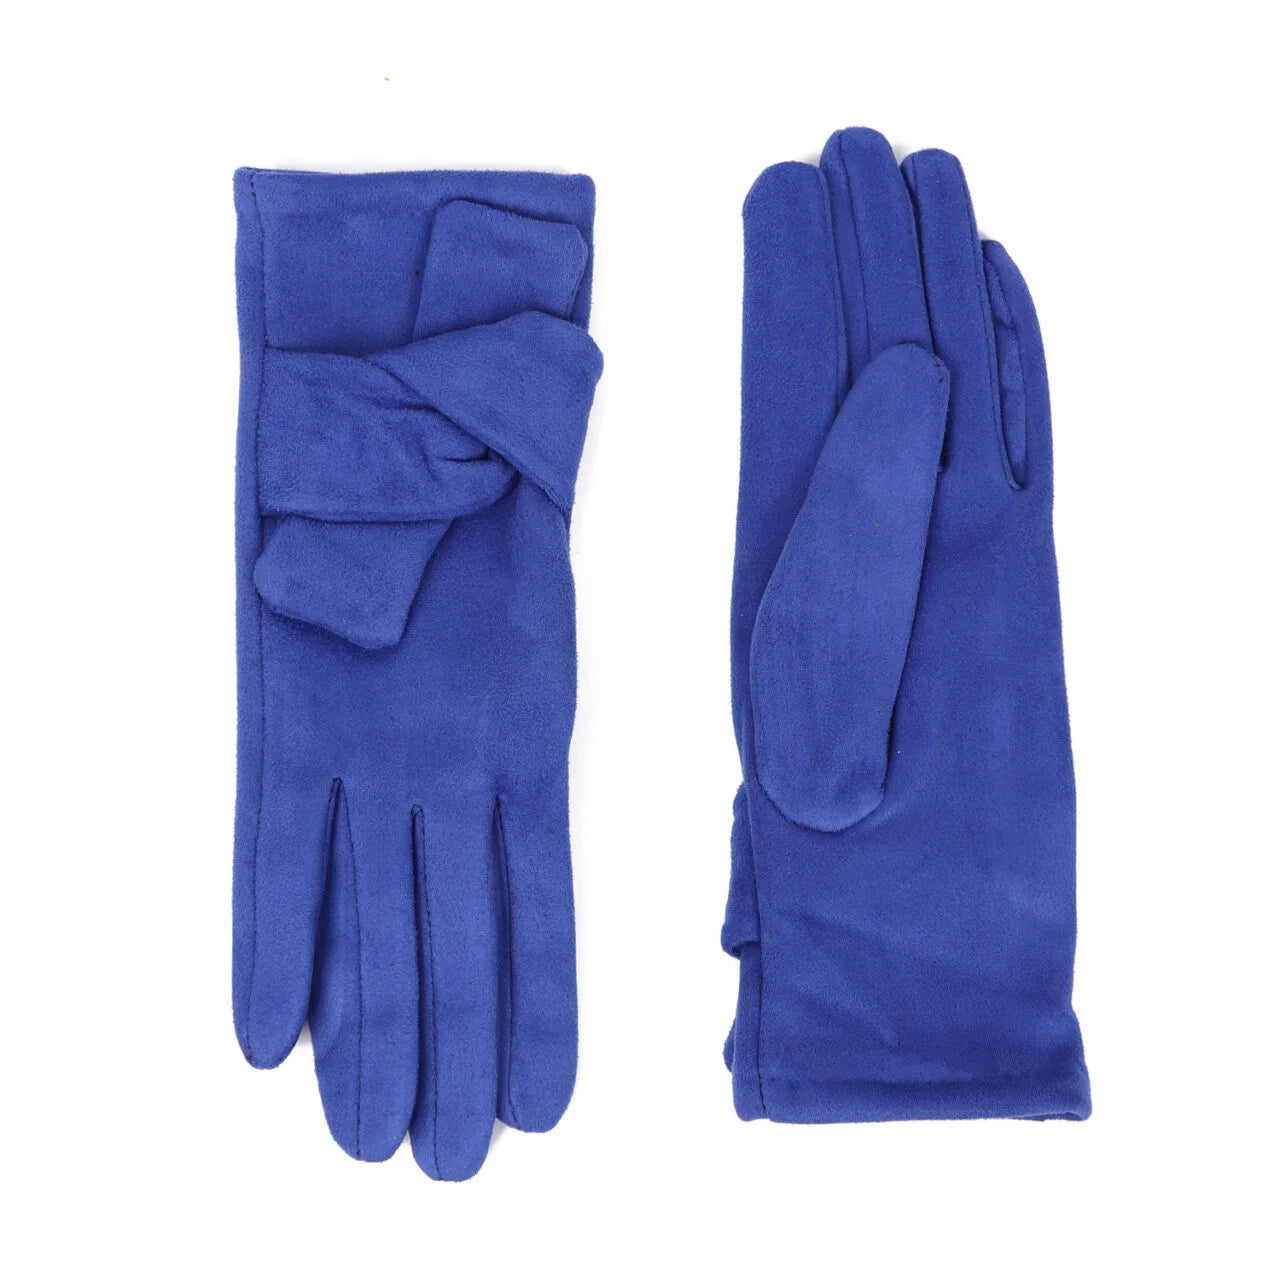 Fab Gifts | Winter Accessories Winter Gloves Alexandra cross-strap Royal Blue by Weirs of Baggot Street